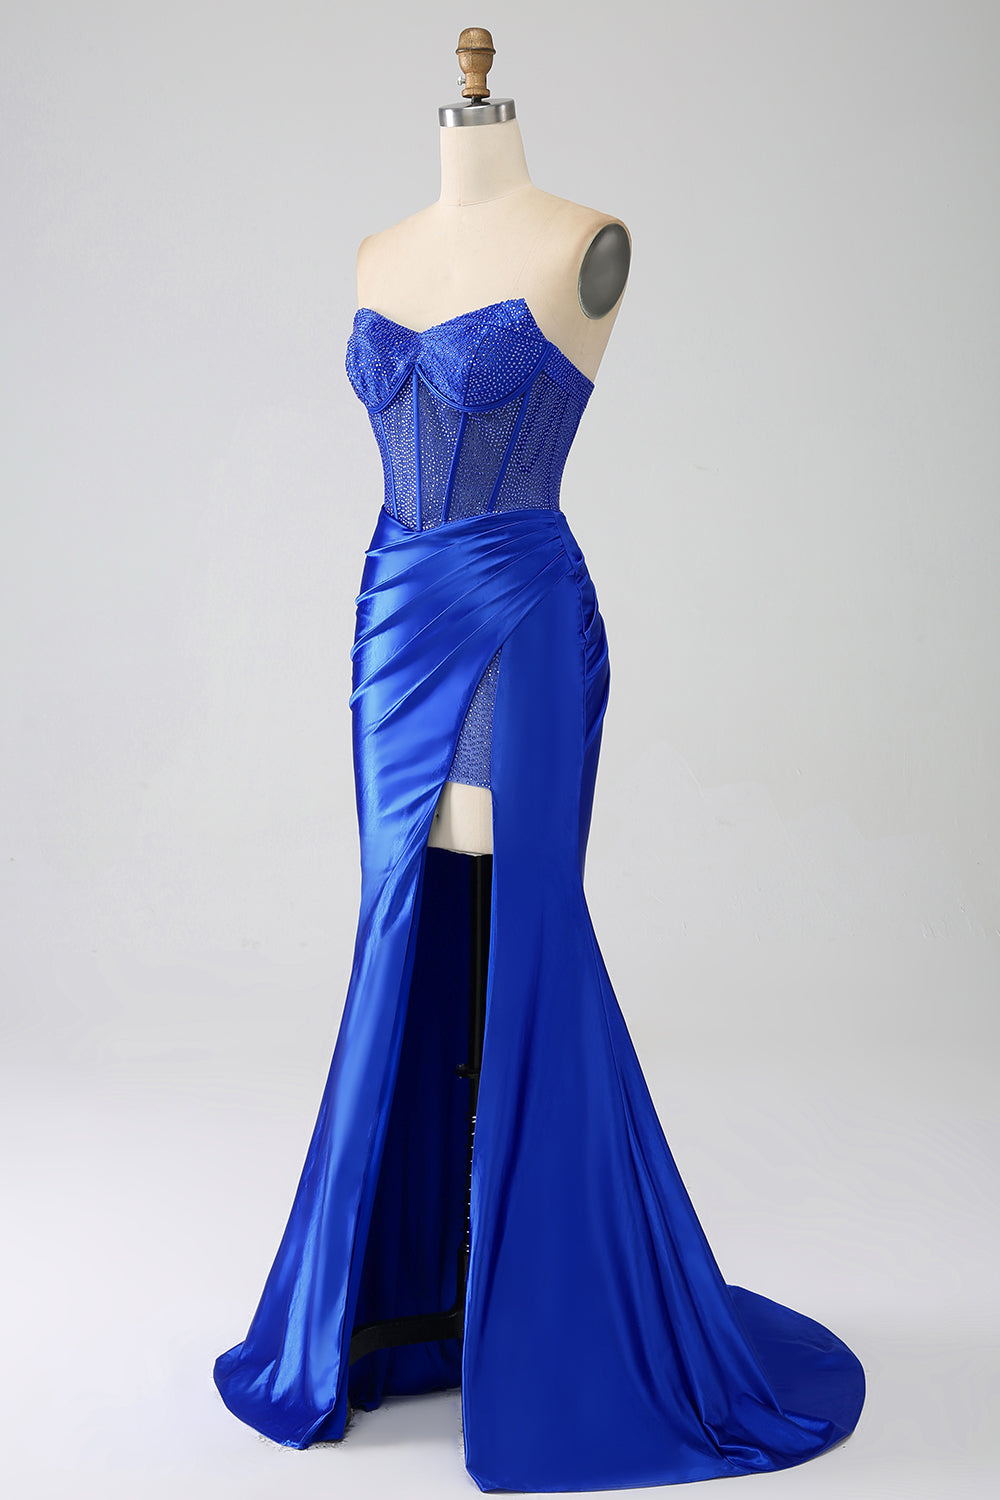 ZAPAKA Women Royal Blue Corset Prom Dress with Beading Mermaid